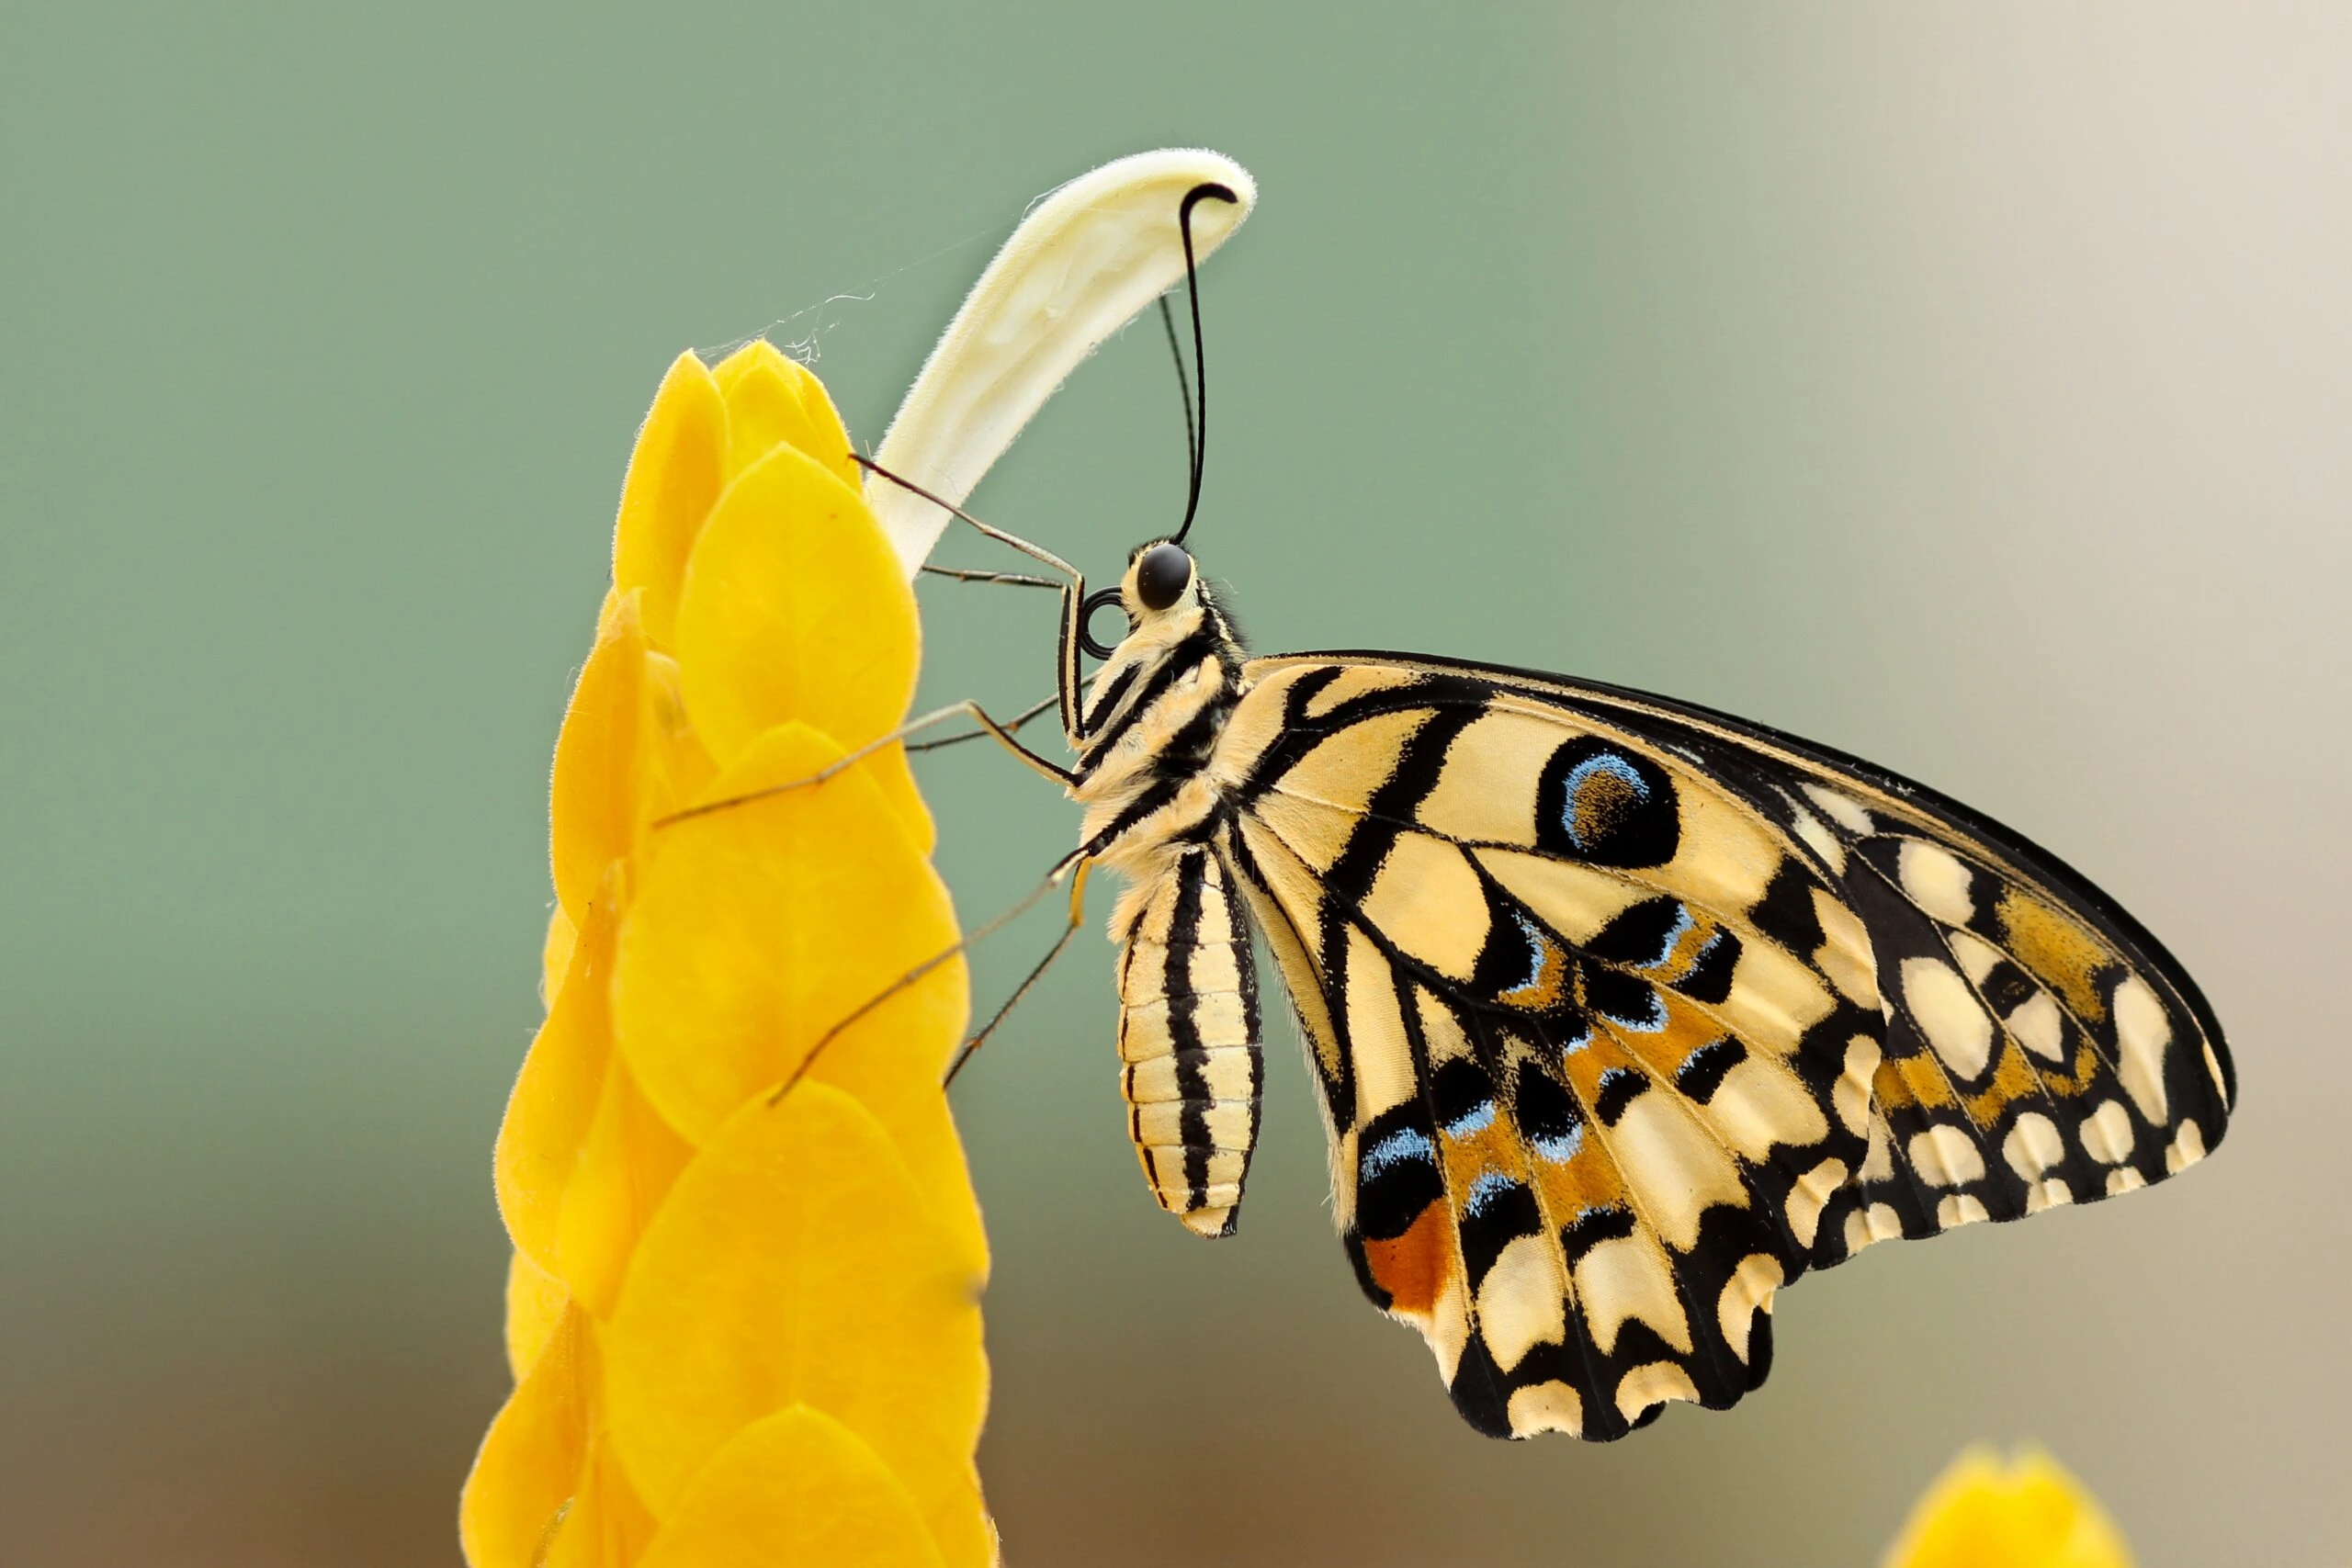 boris-smokrovic-Monarch on pupa of flower-unsplash-scaled